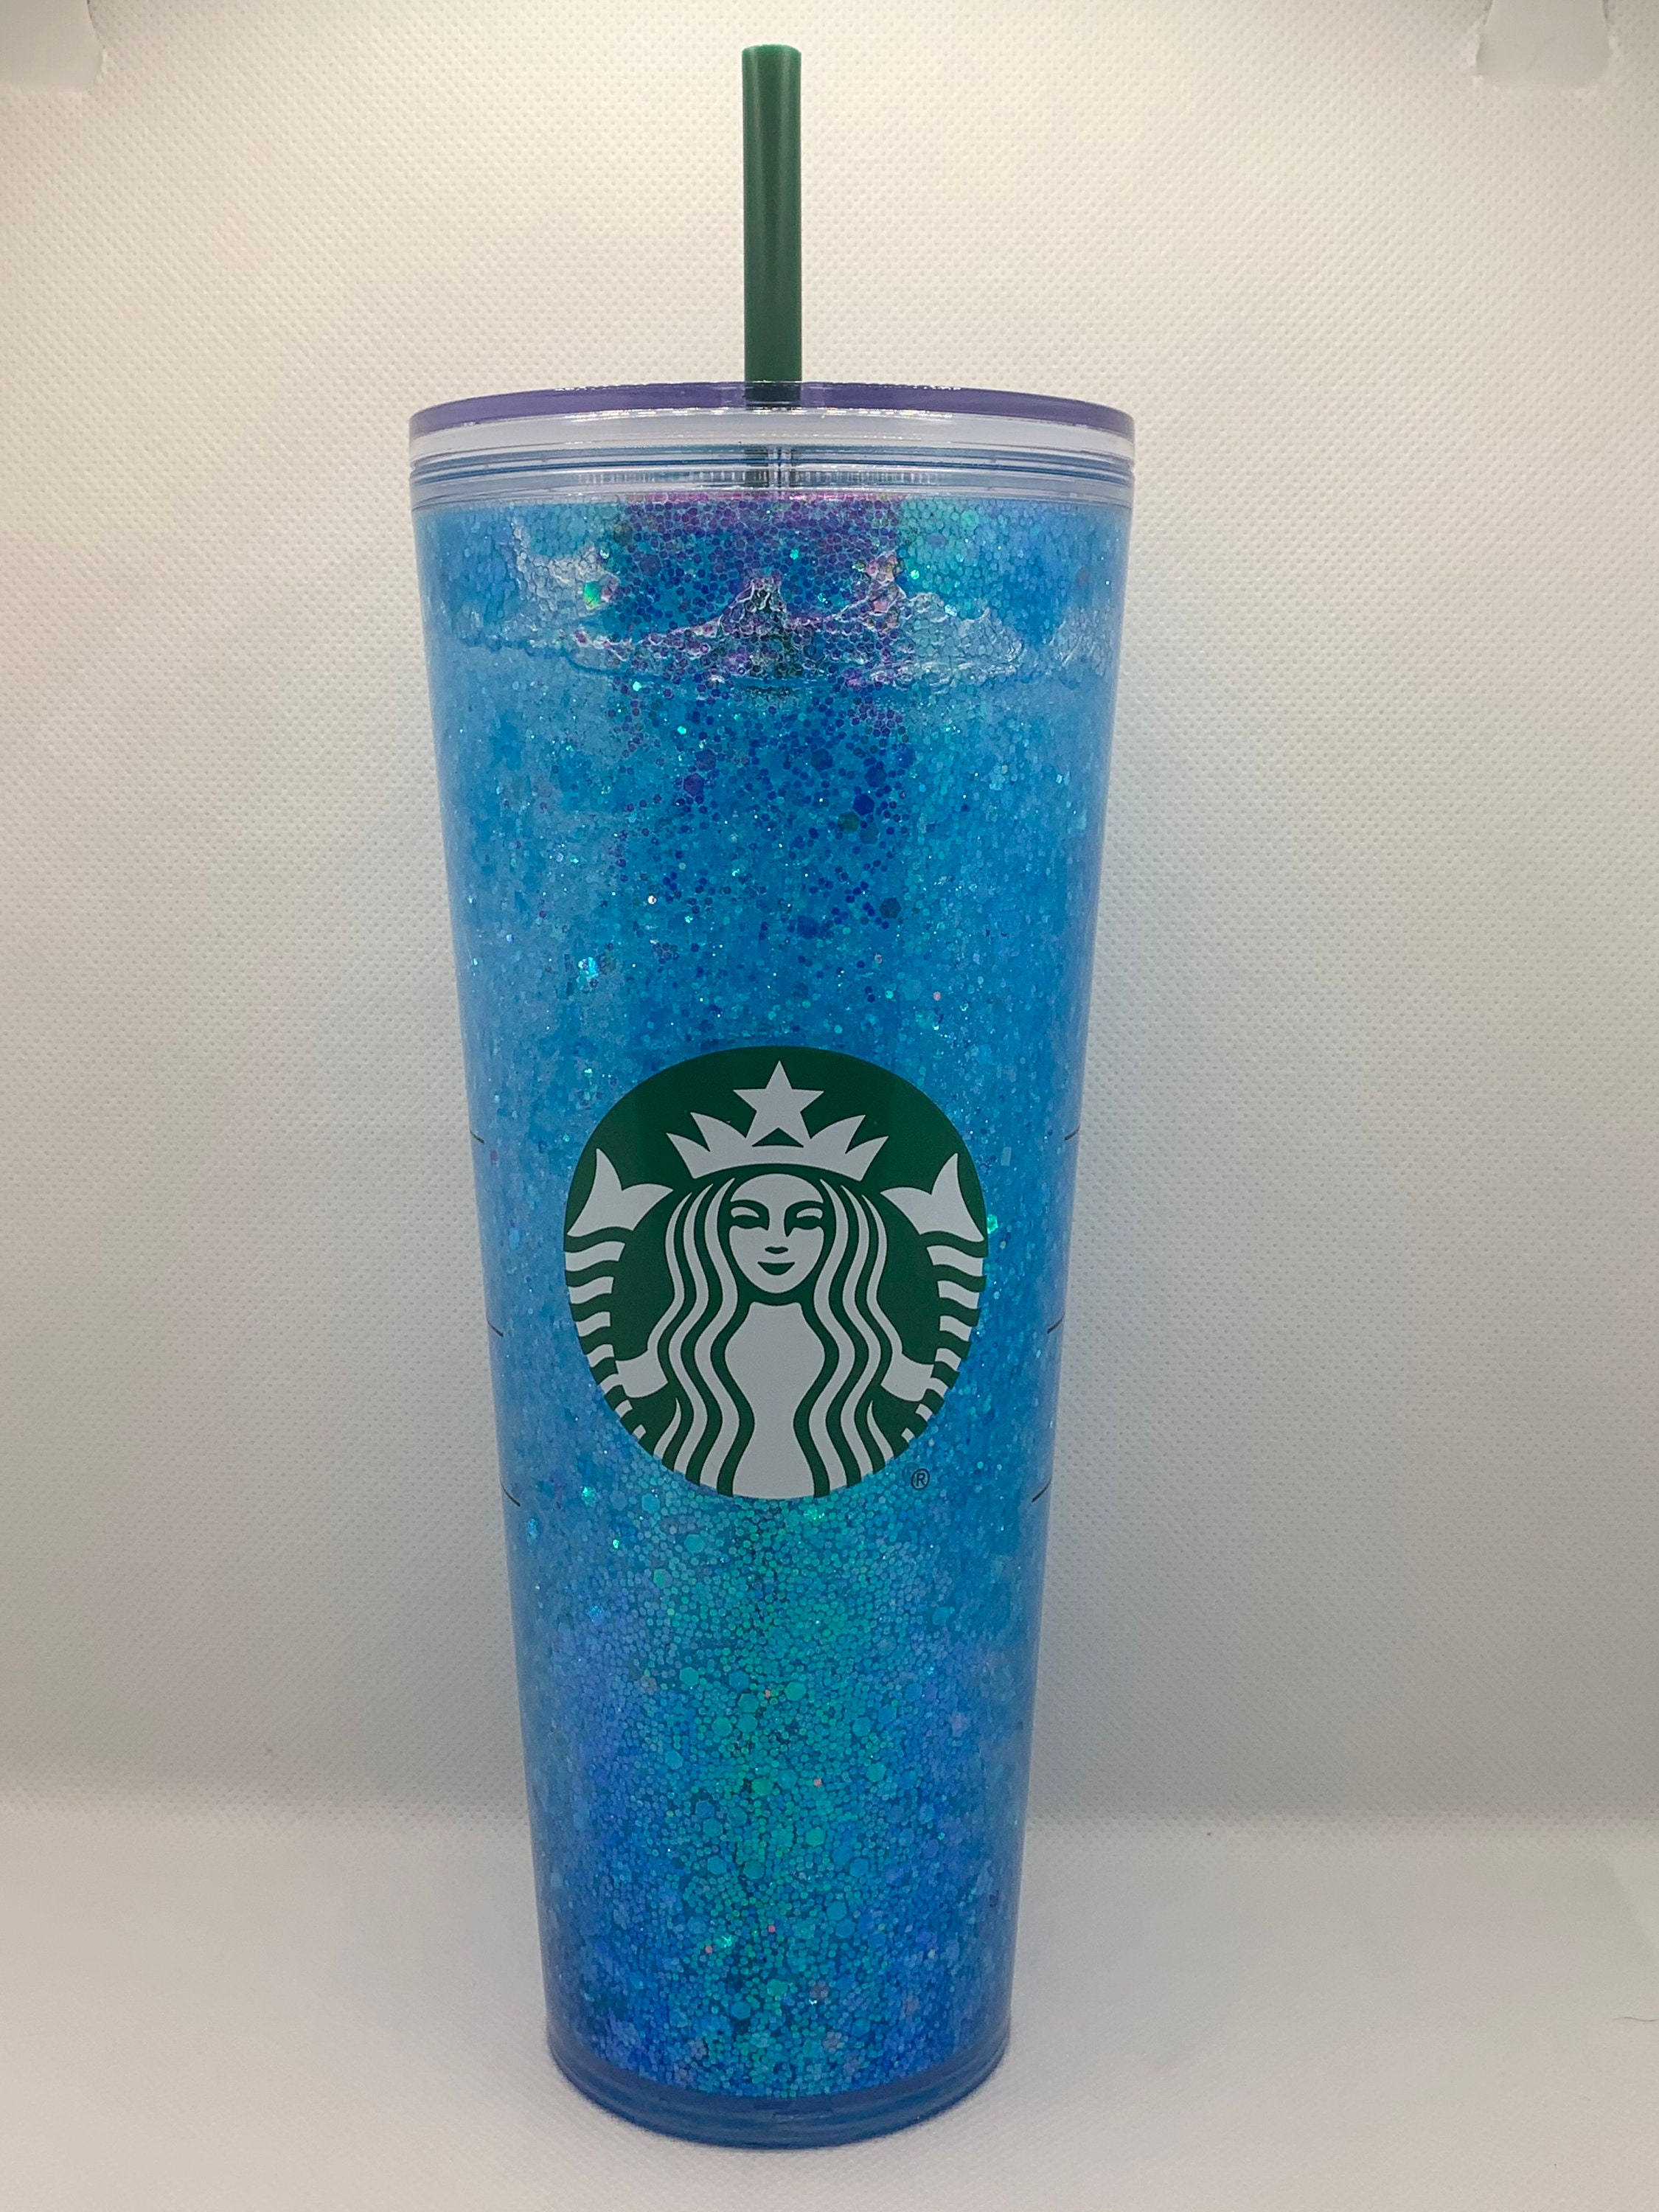 Snow globe Starbucks tumbler Blue Venti Starbucks Snowglobe | Etsy